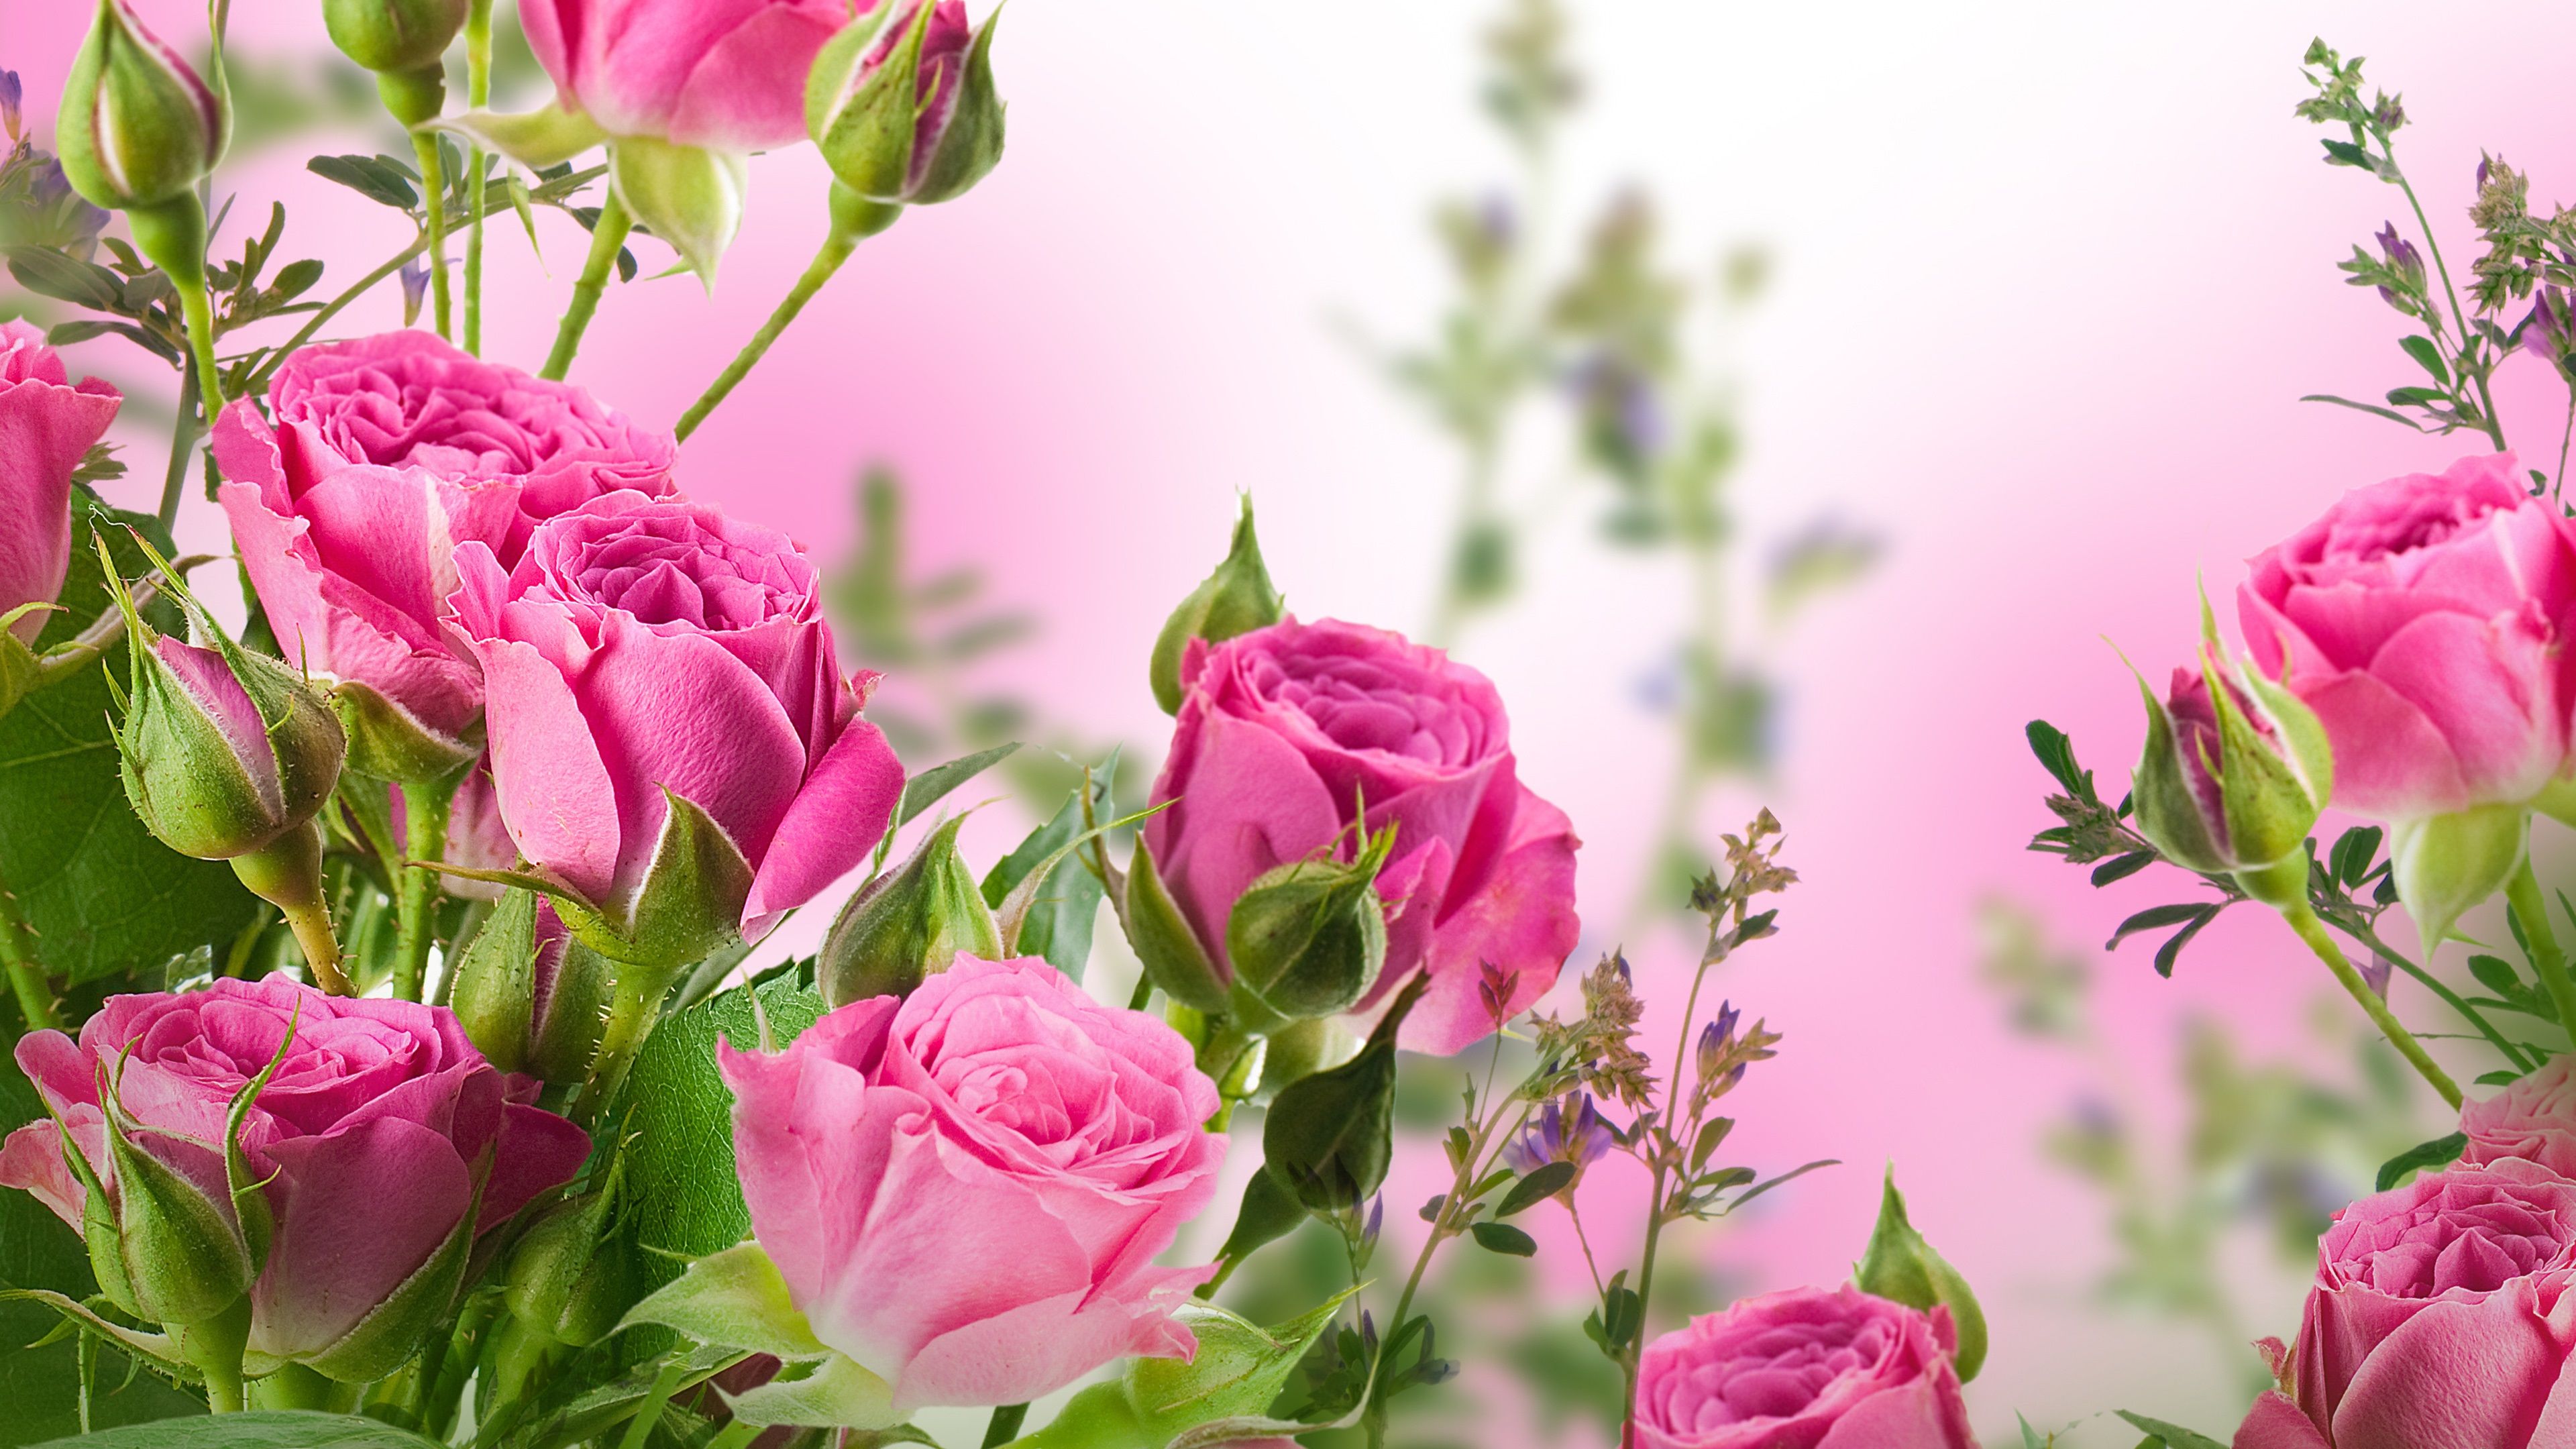 Wallpaper Pink rose flowers, garden 3840x2160 UHD 4K Picture, Image